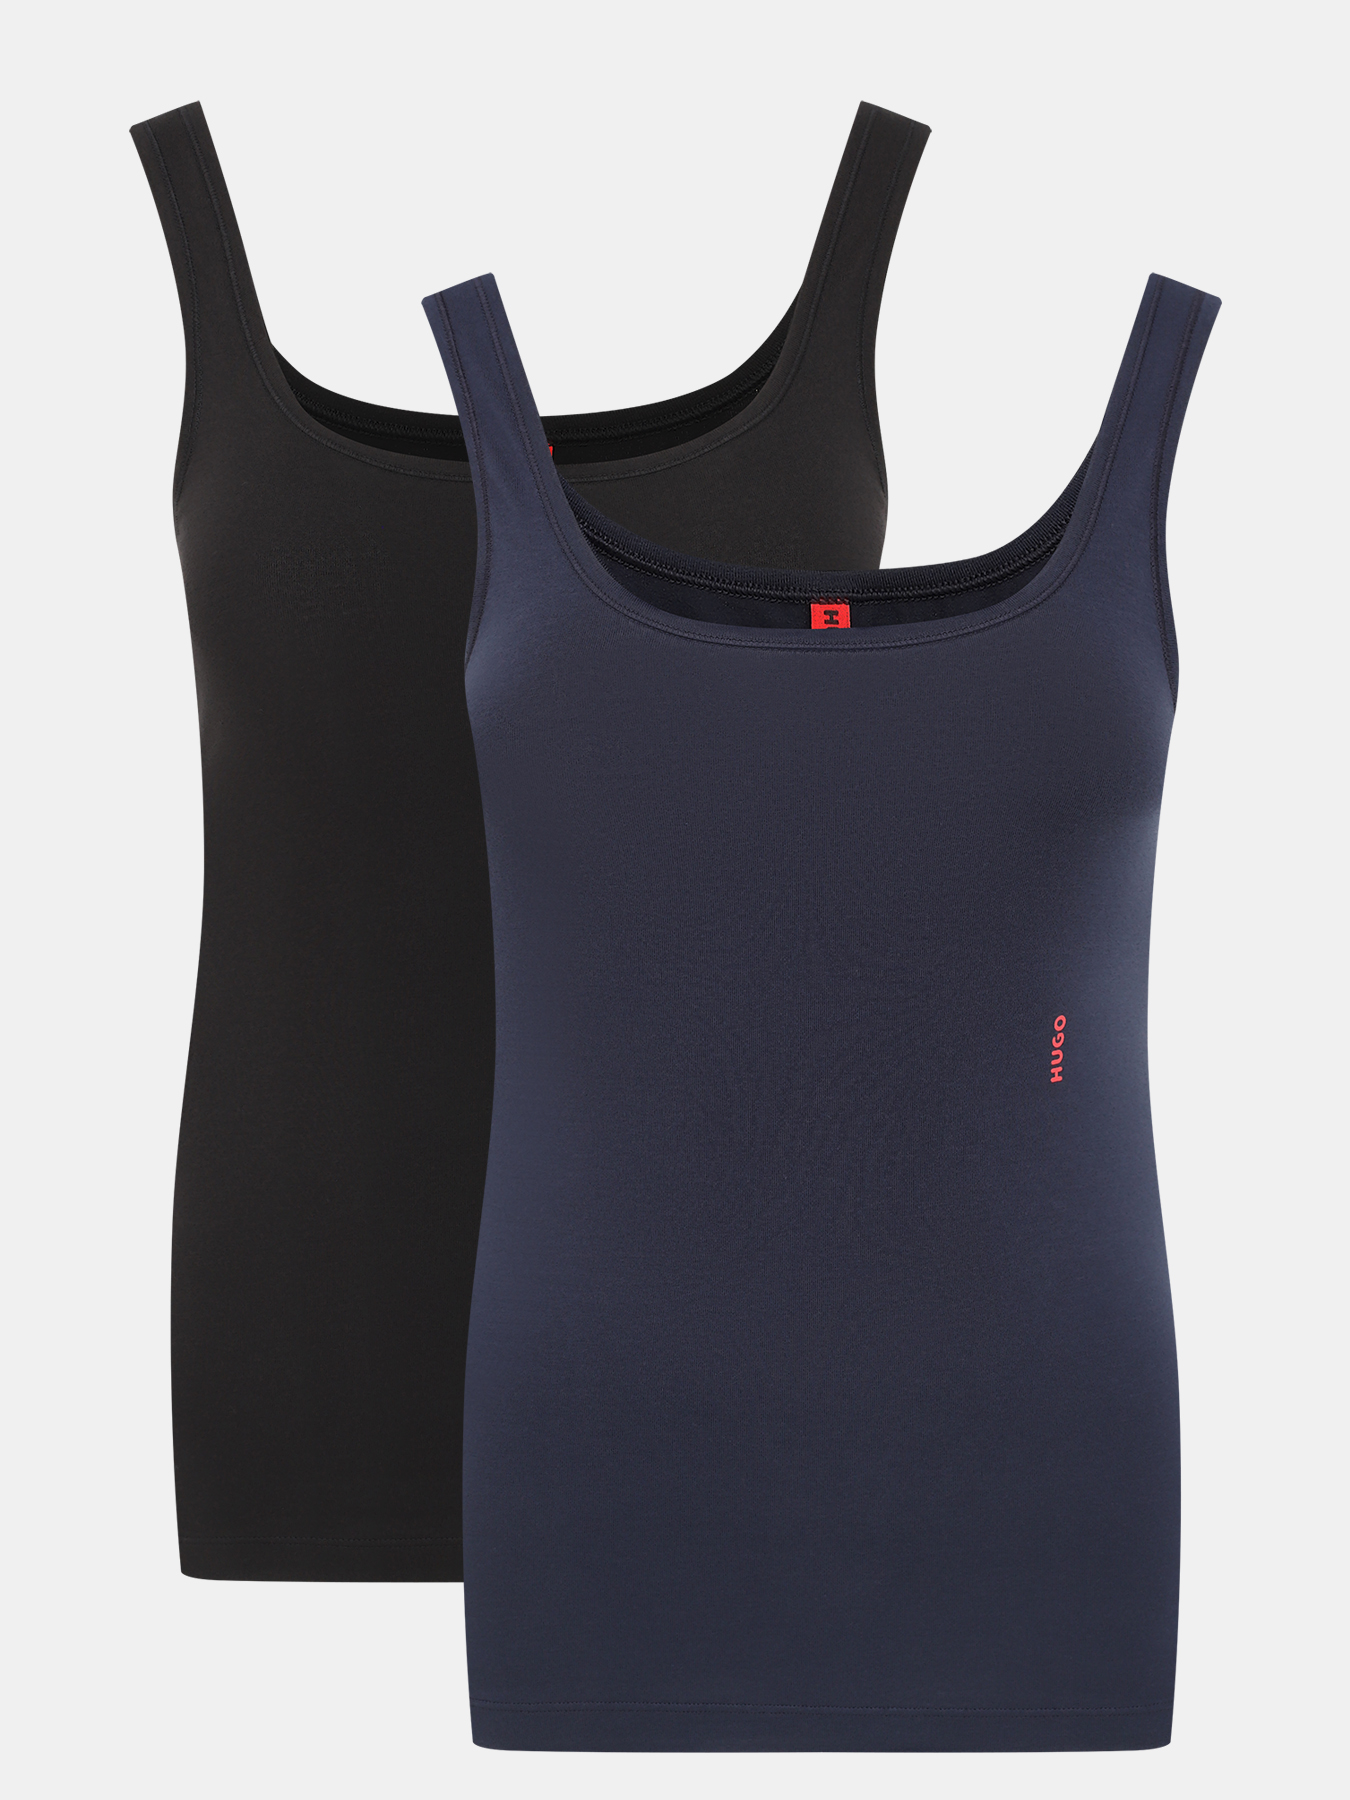 Майка Twin vest (2 шт) HUGO 427829-042, цвет мультиколор, размер 42-44